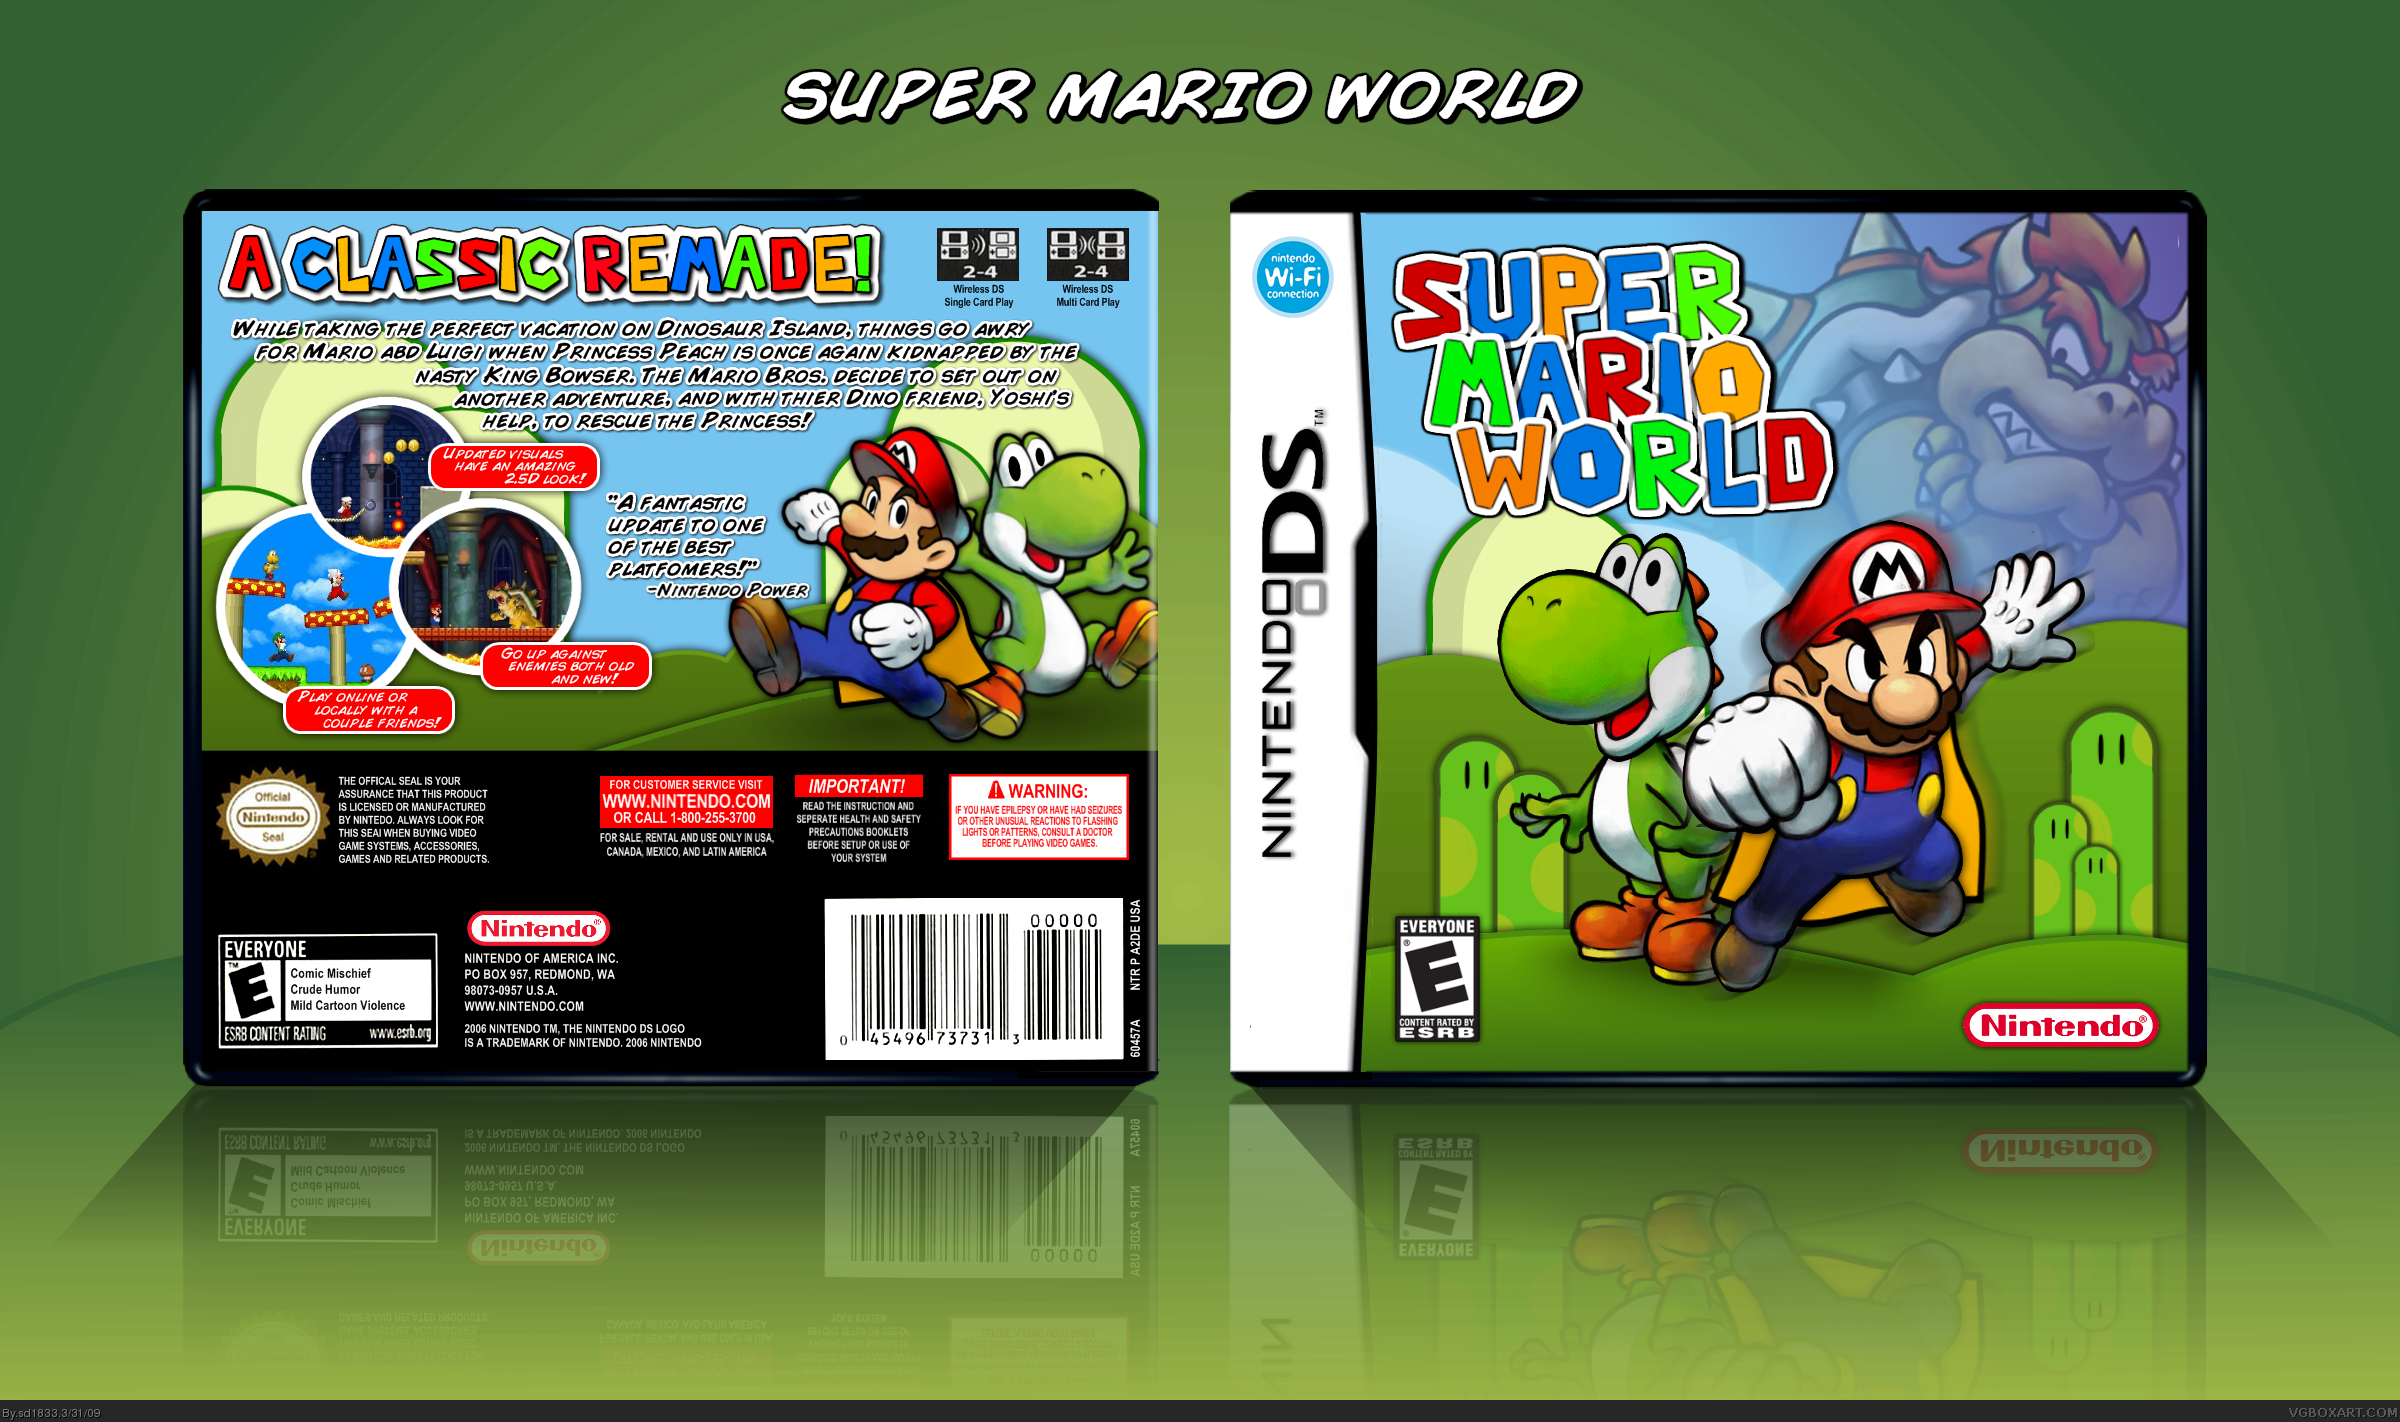 Super Mario World Nintendo DS Box Art Cover by sd1833